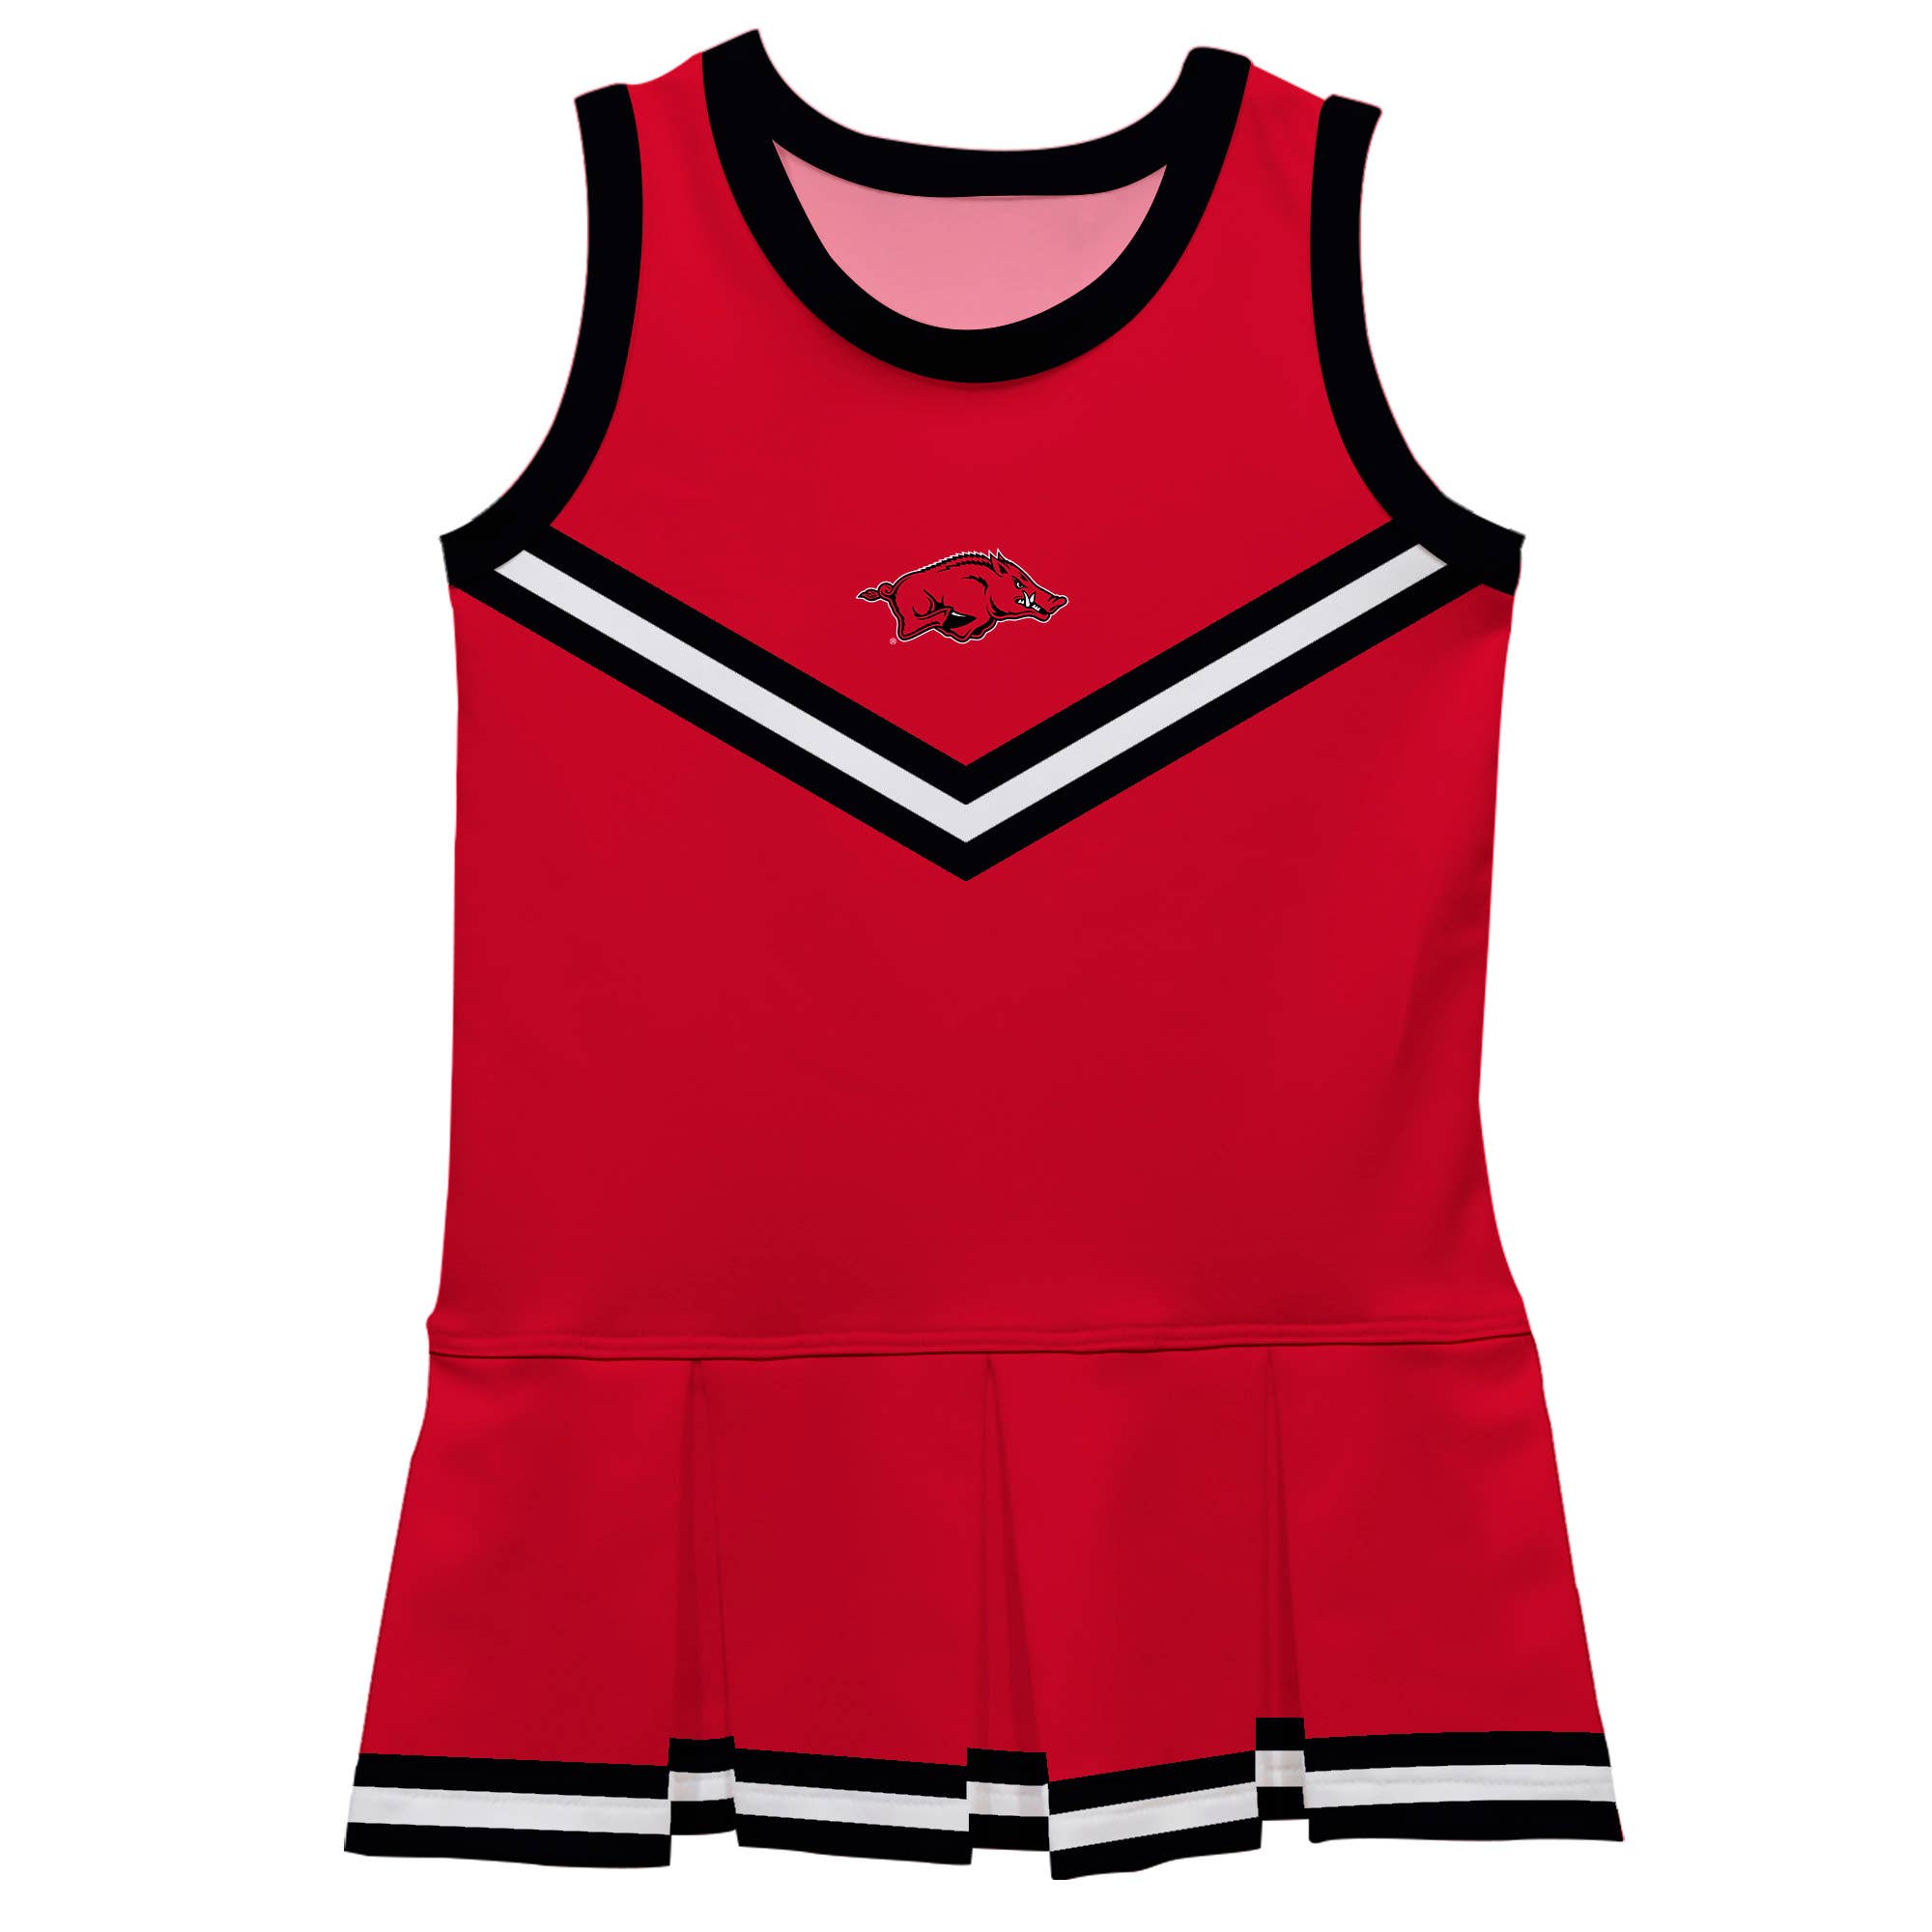 Arkansas Razorbacks Red Sleeveless Cheerleader Dress